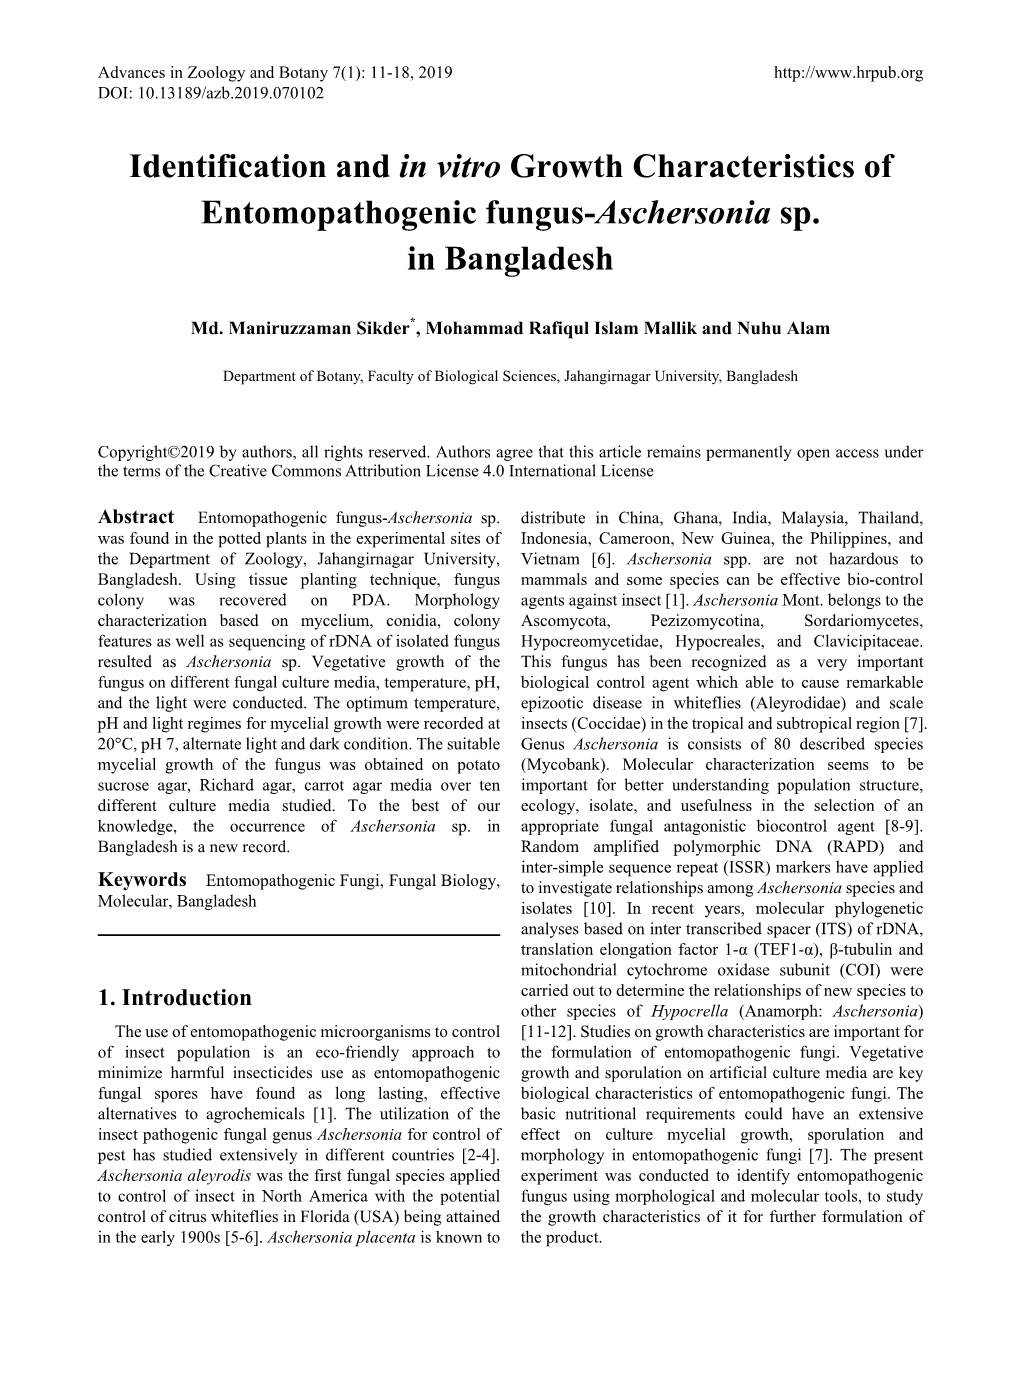 Identification and in Vitro Growth Characteristics of Entomopathogenic Fungus-Aschersonia Sp. in Bangladesh